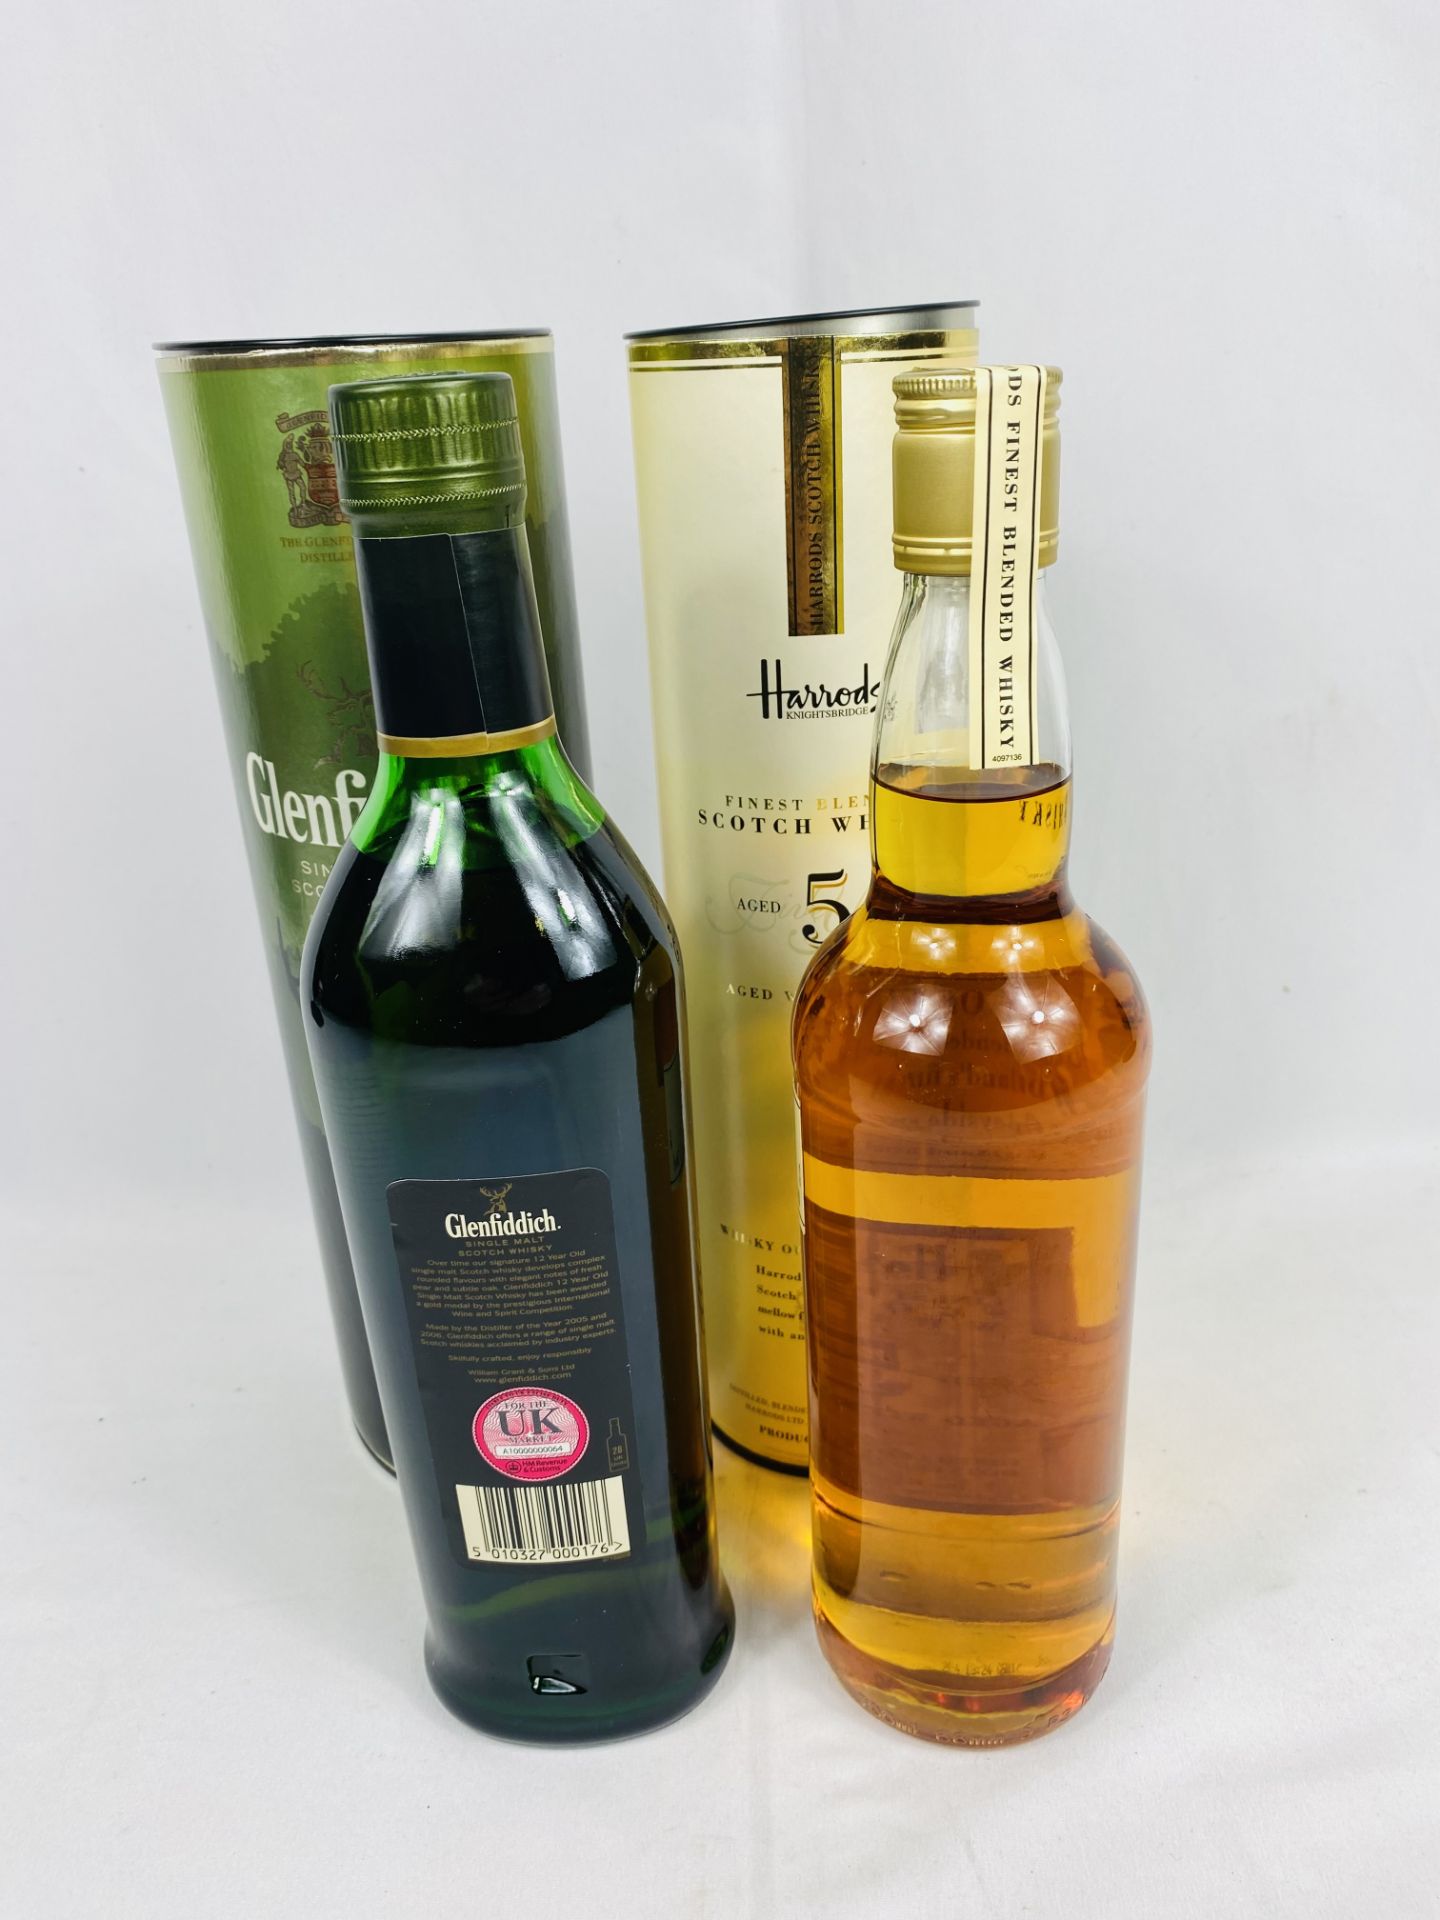 70cl bottle of Glenfiddich Scotch whisky; together with a bottle of Harrods finest blended whisky - Image 2 of 2